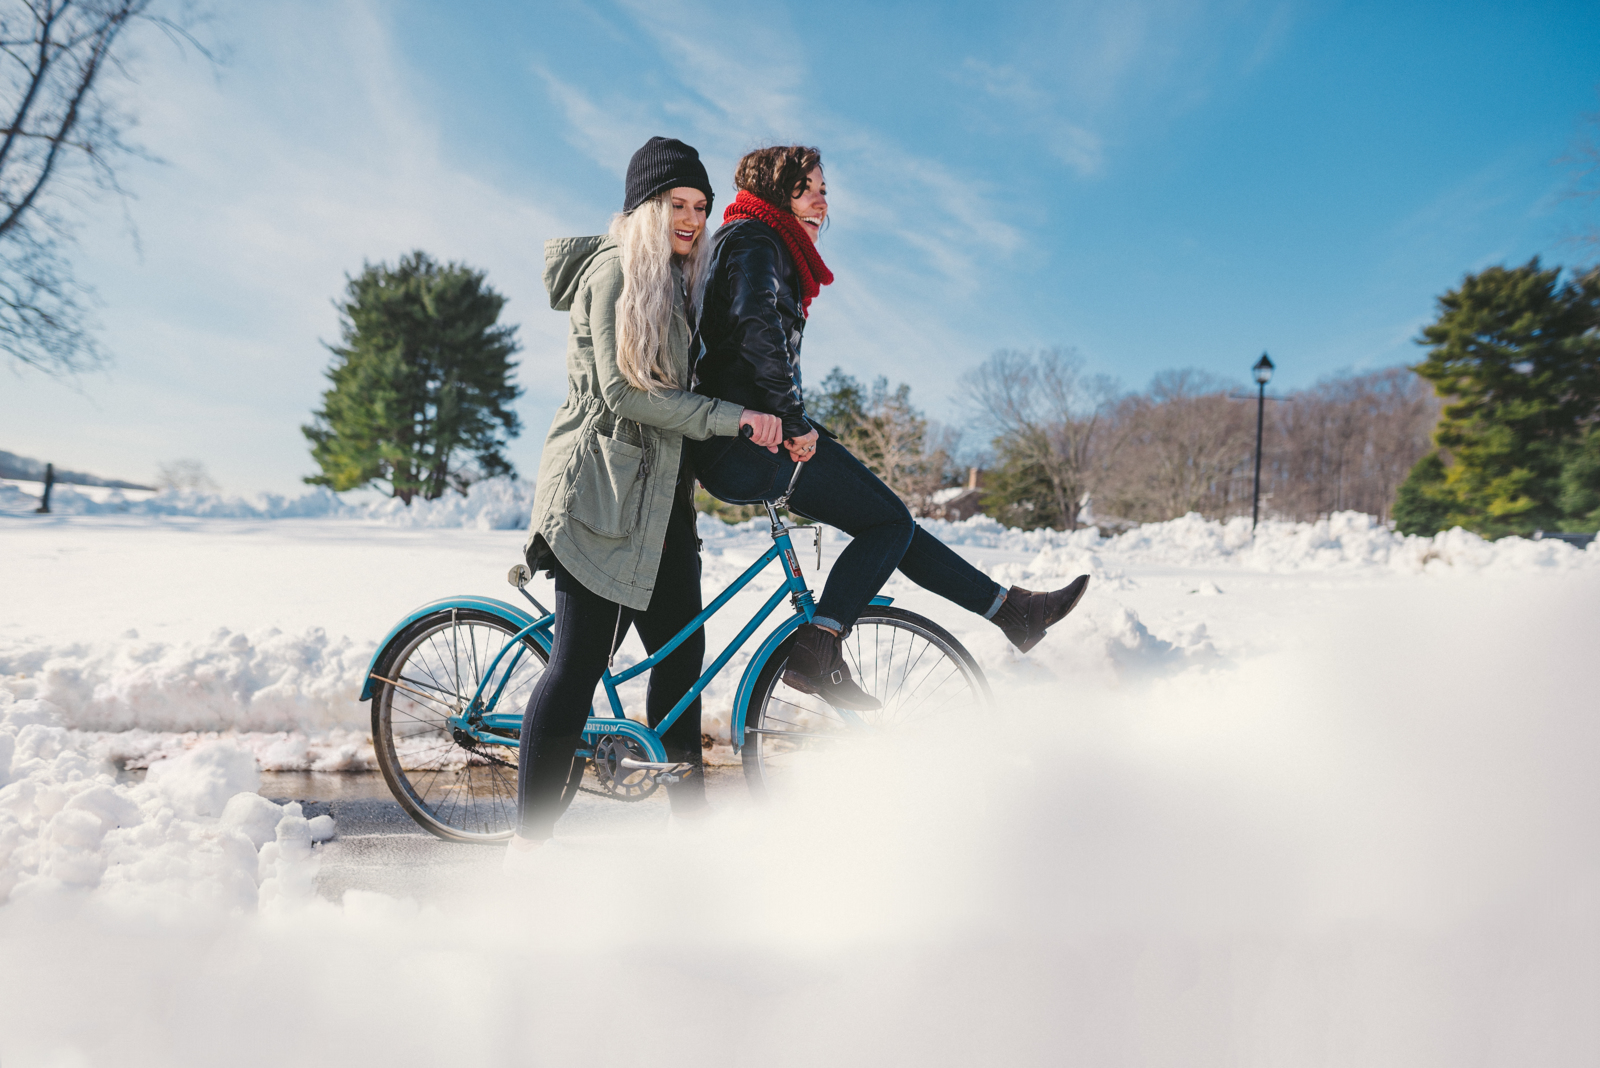 Video Marketing ideas for Winter Holidays